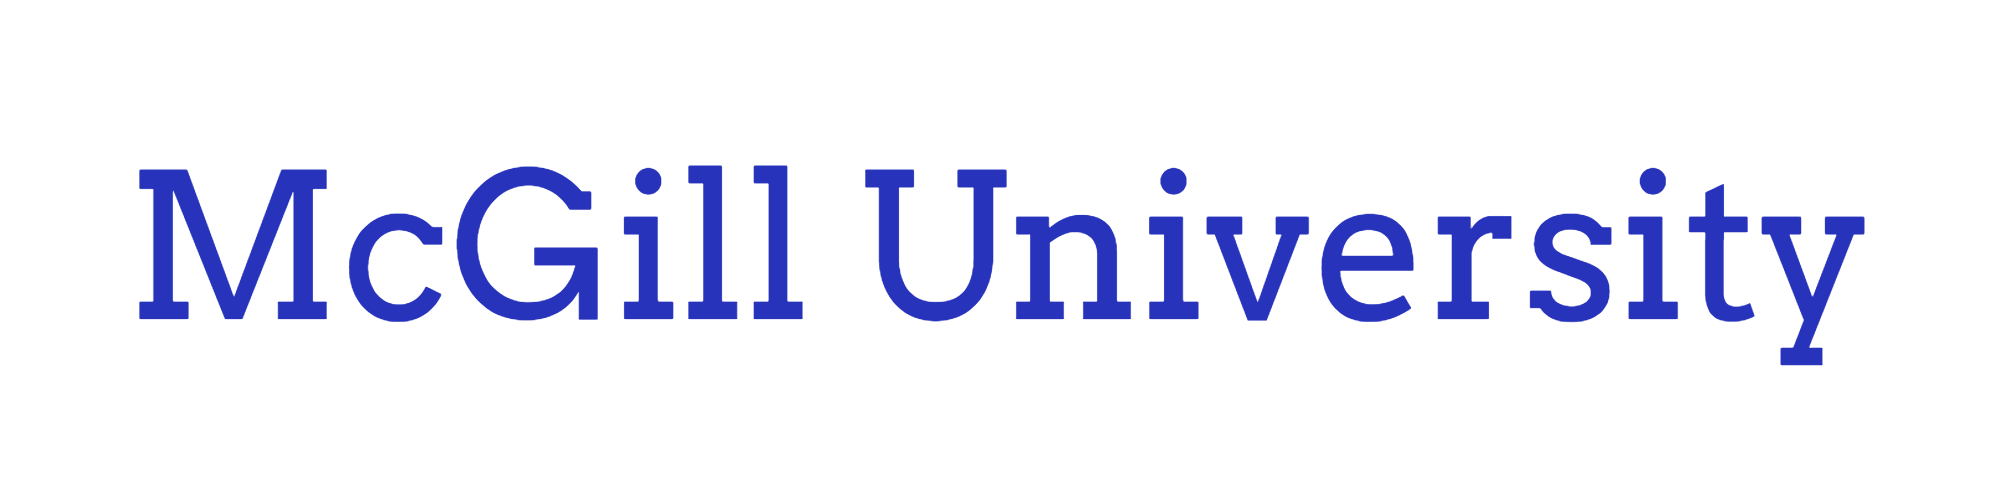 McGill University-logo.png